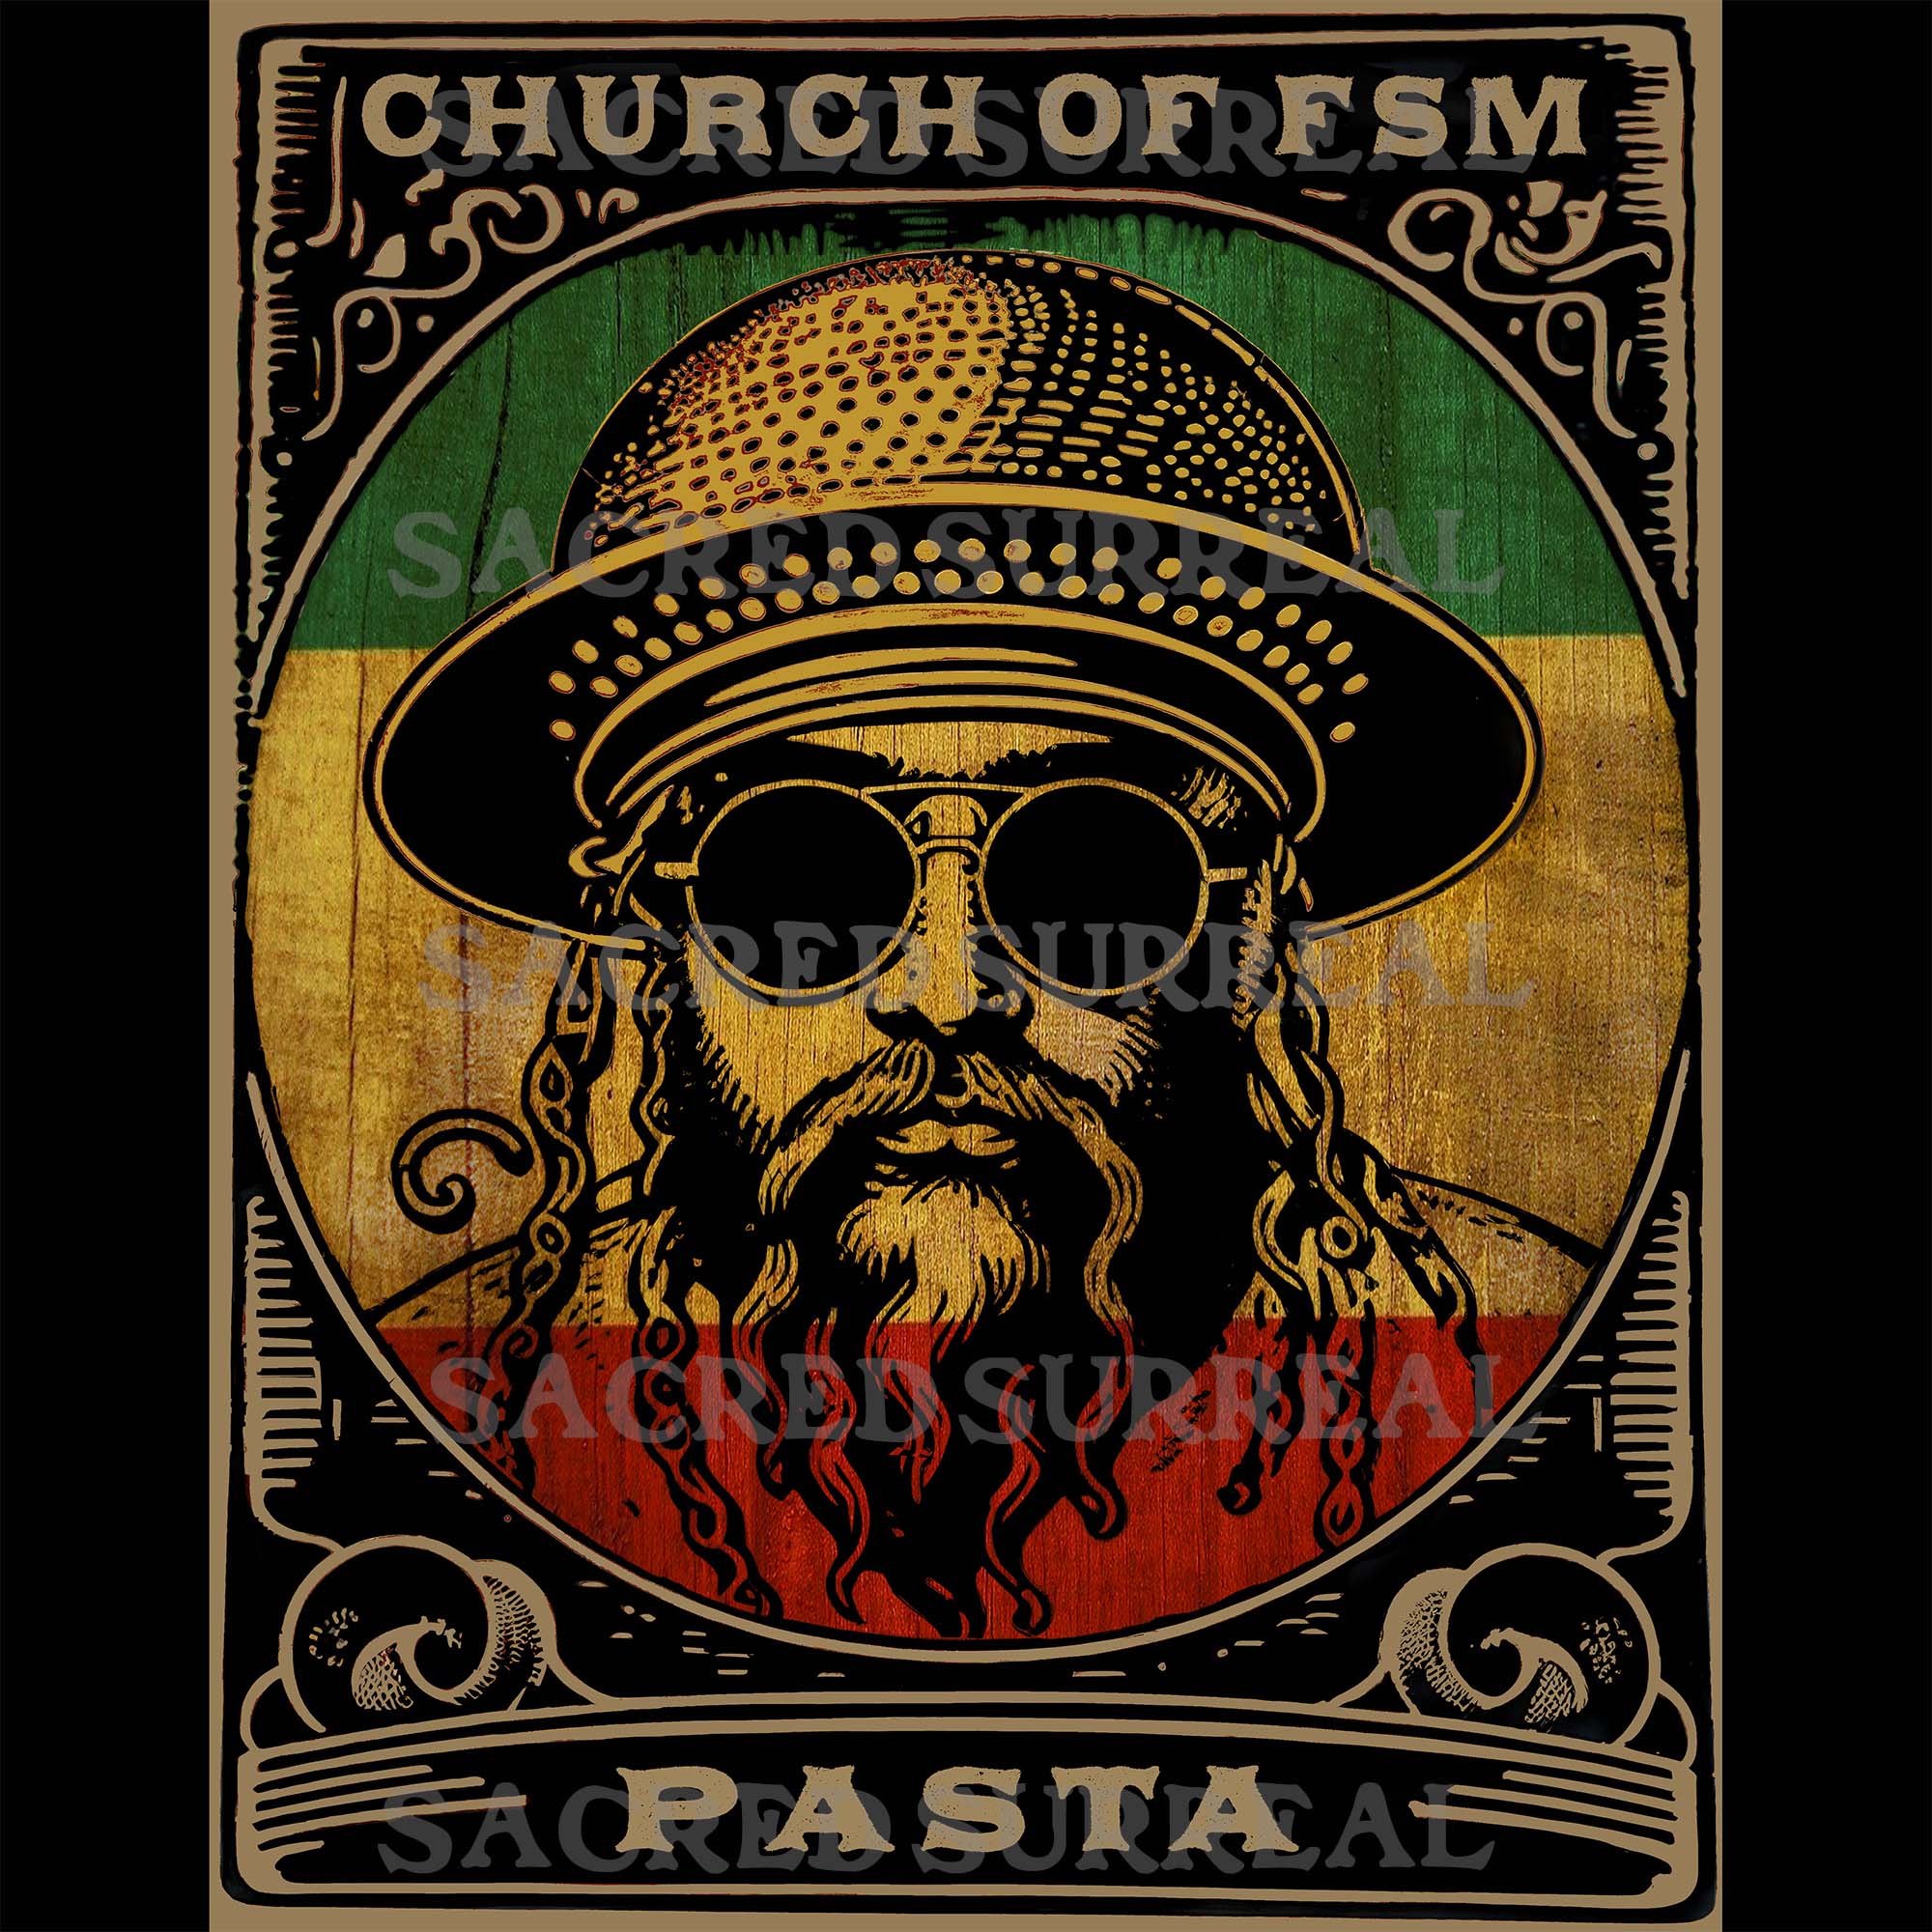 T-Shirts Pastafarianism & The Flying Spaghetti Monster (FSM) | Reggae and Atheist Inspired Pasta Graphic Art T-Shirt